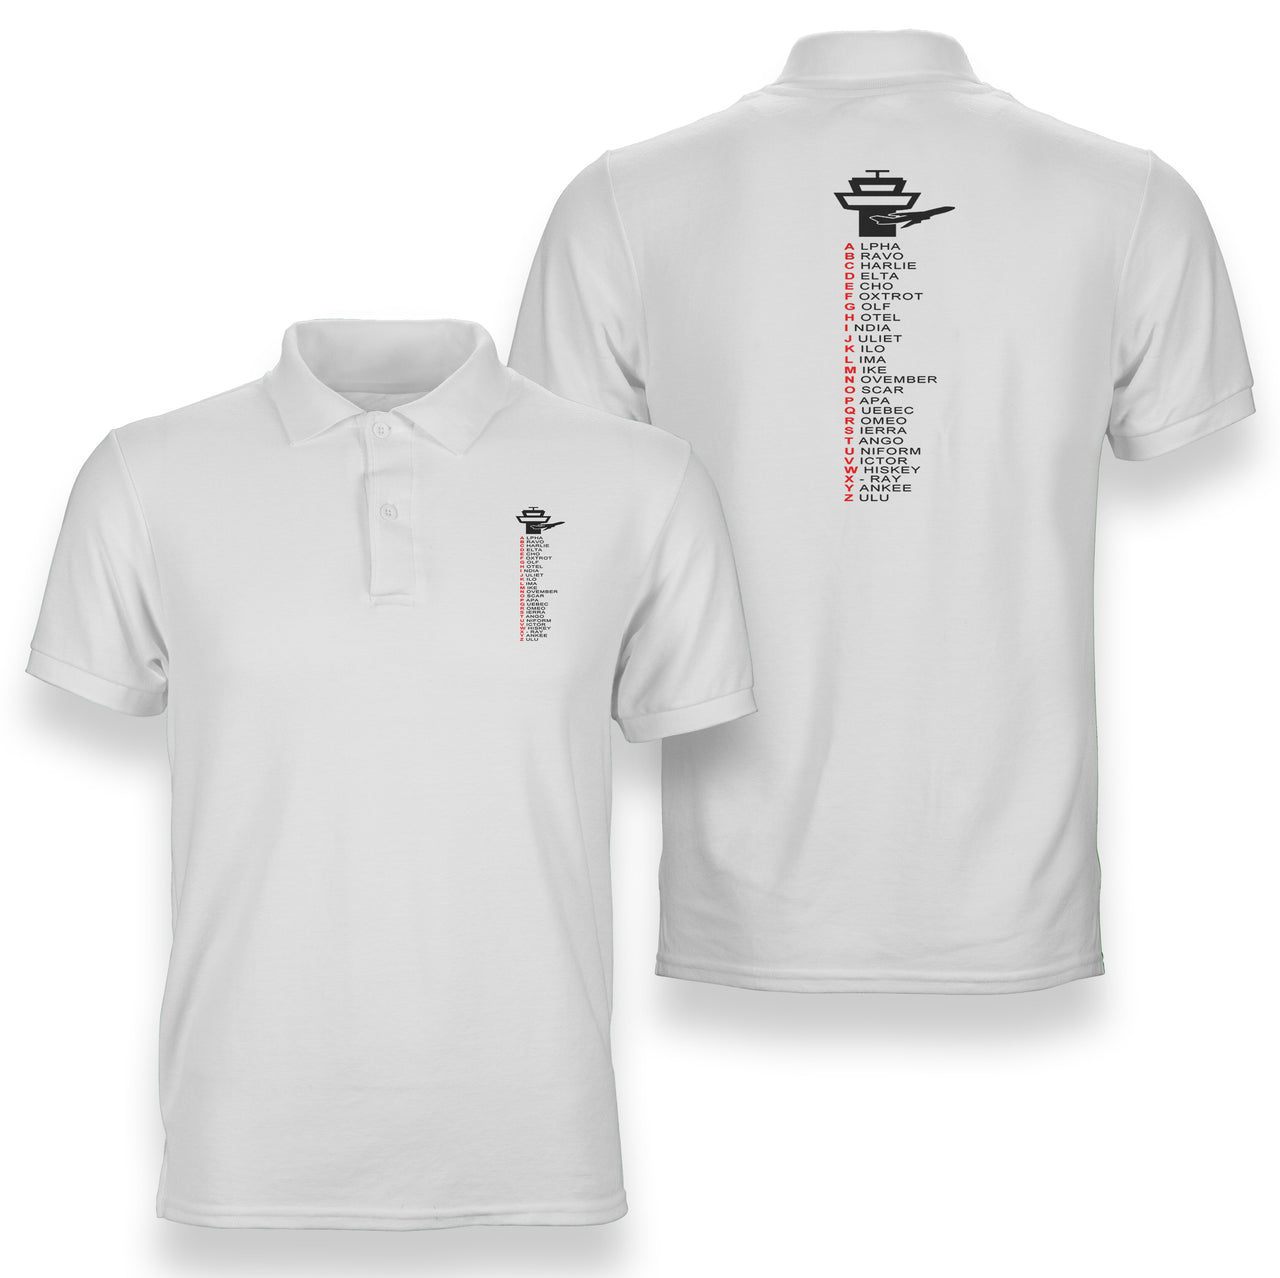 Aviation Alphabet Designed Double Side Polo T-Shirts